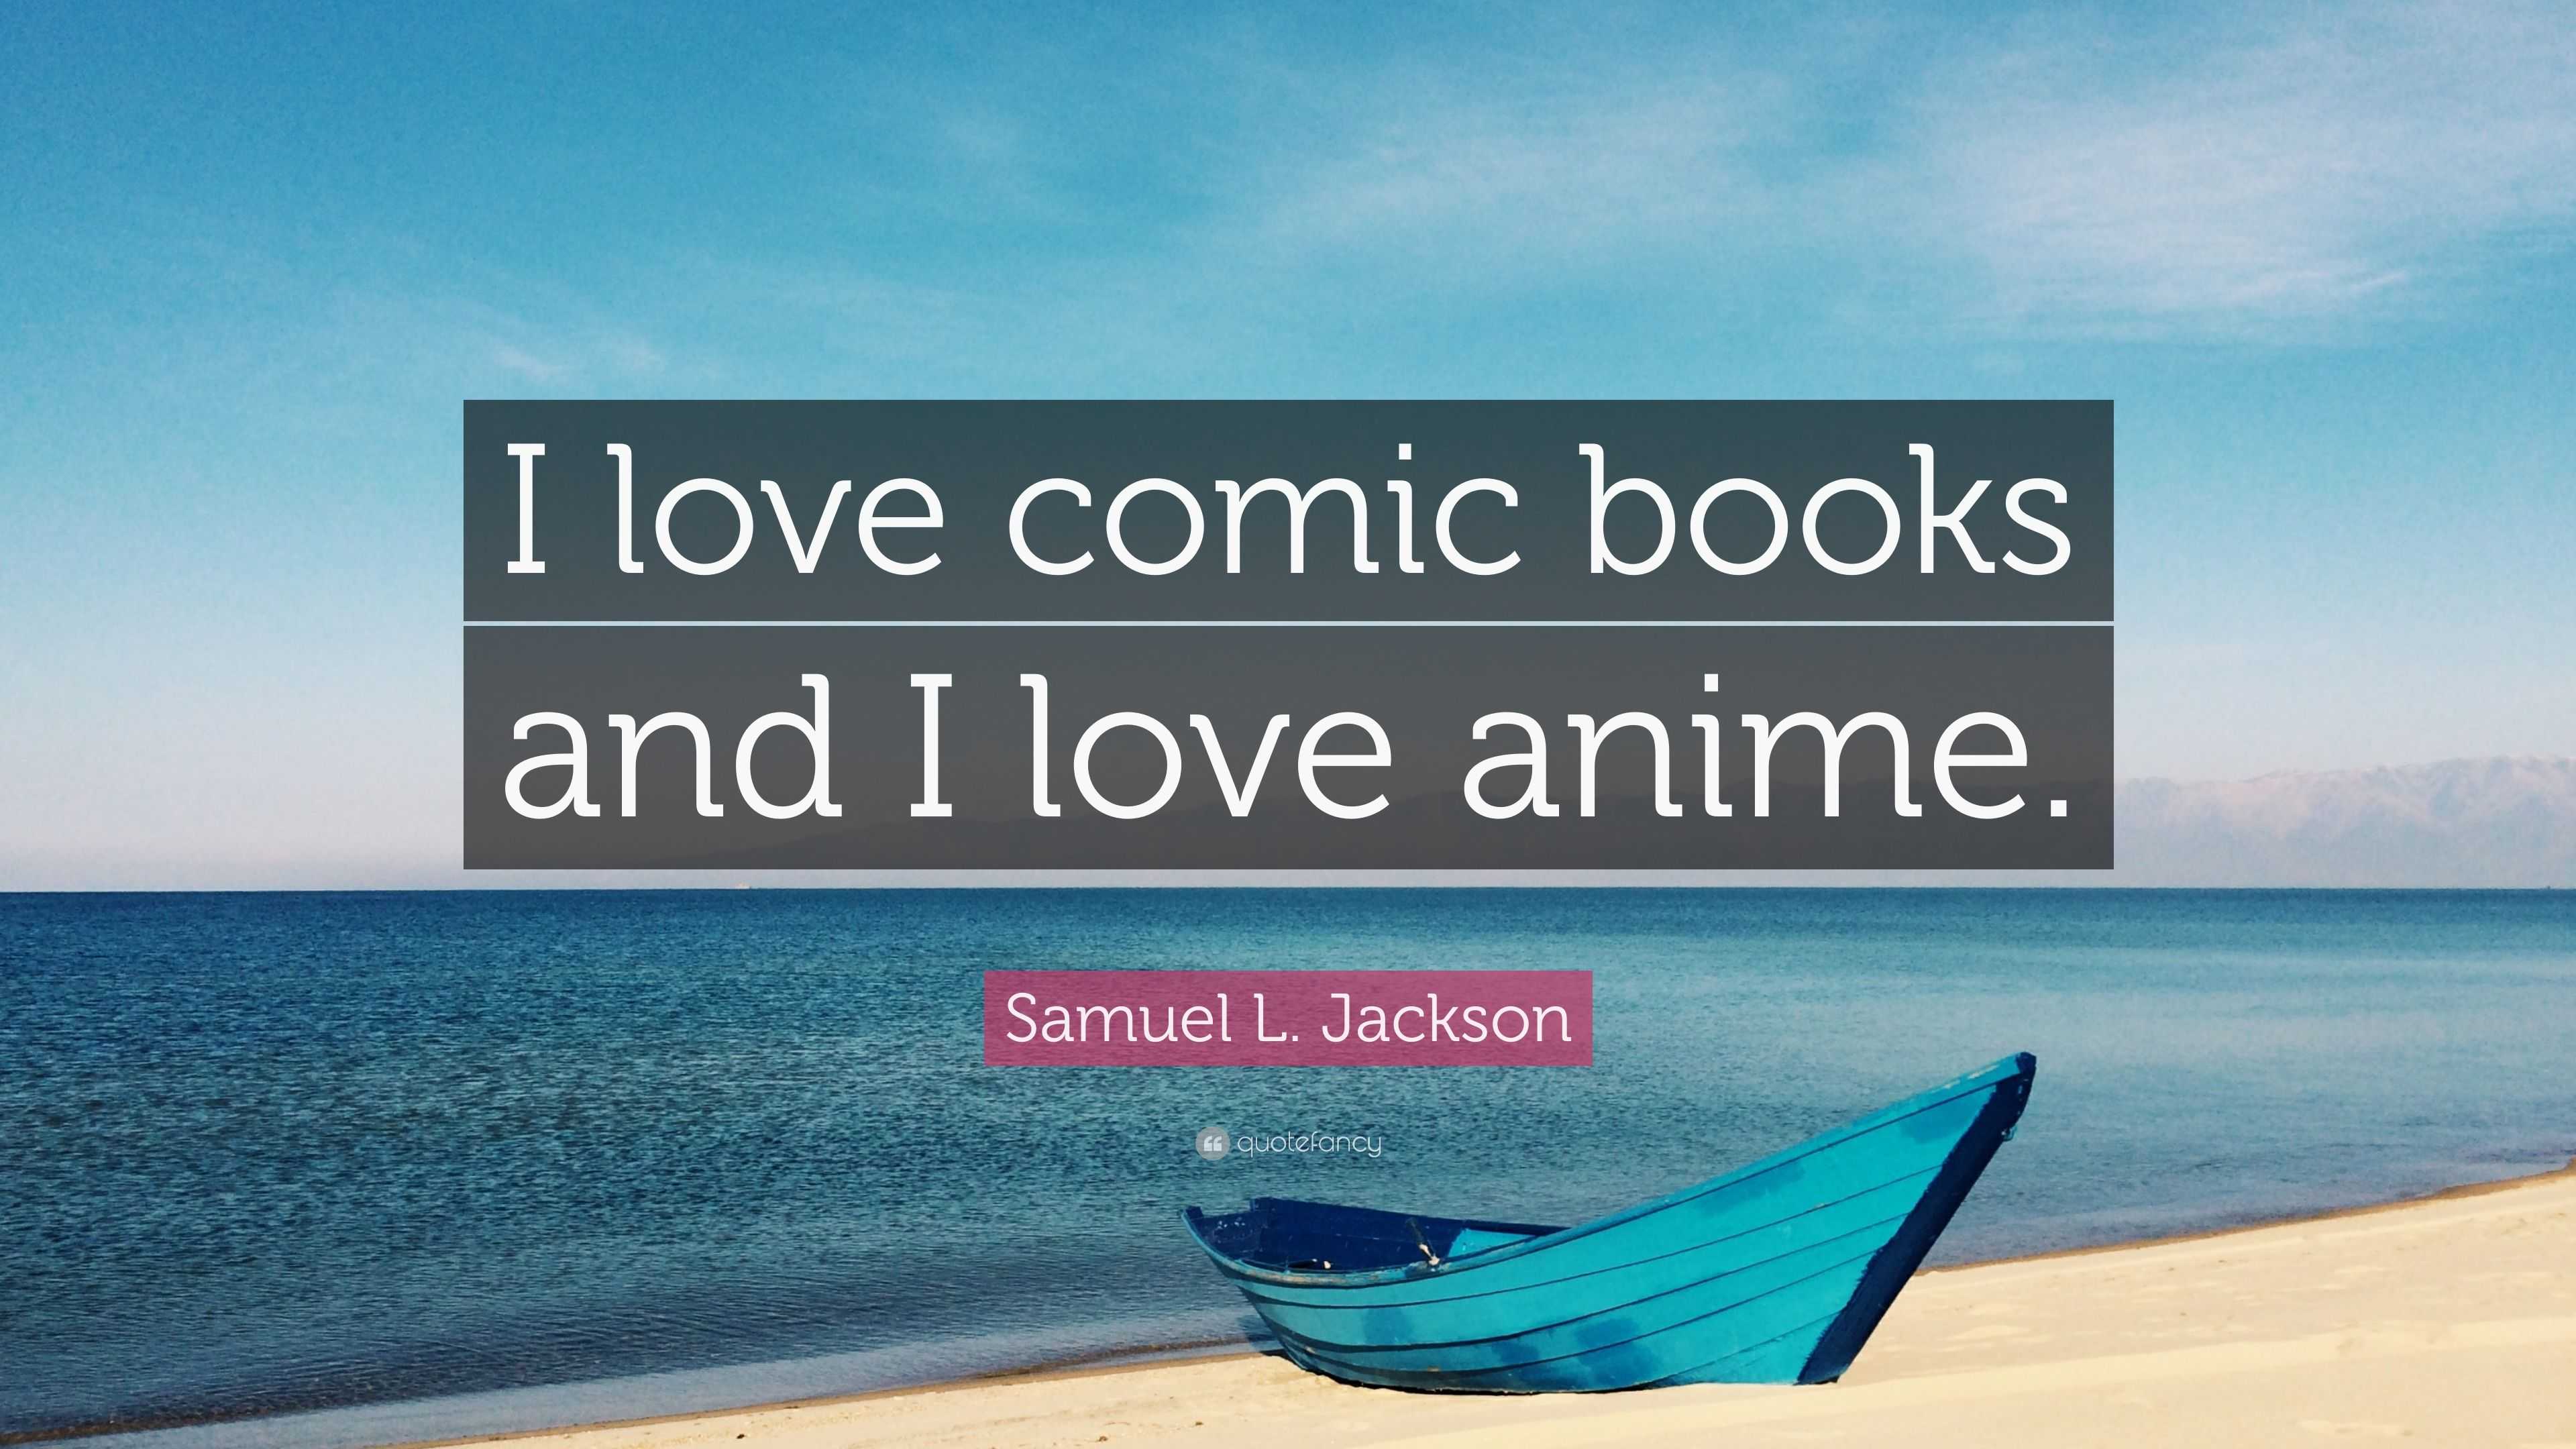 Samuel L. Jackson Quote: “I love comic books and I love anime.”